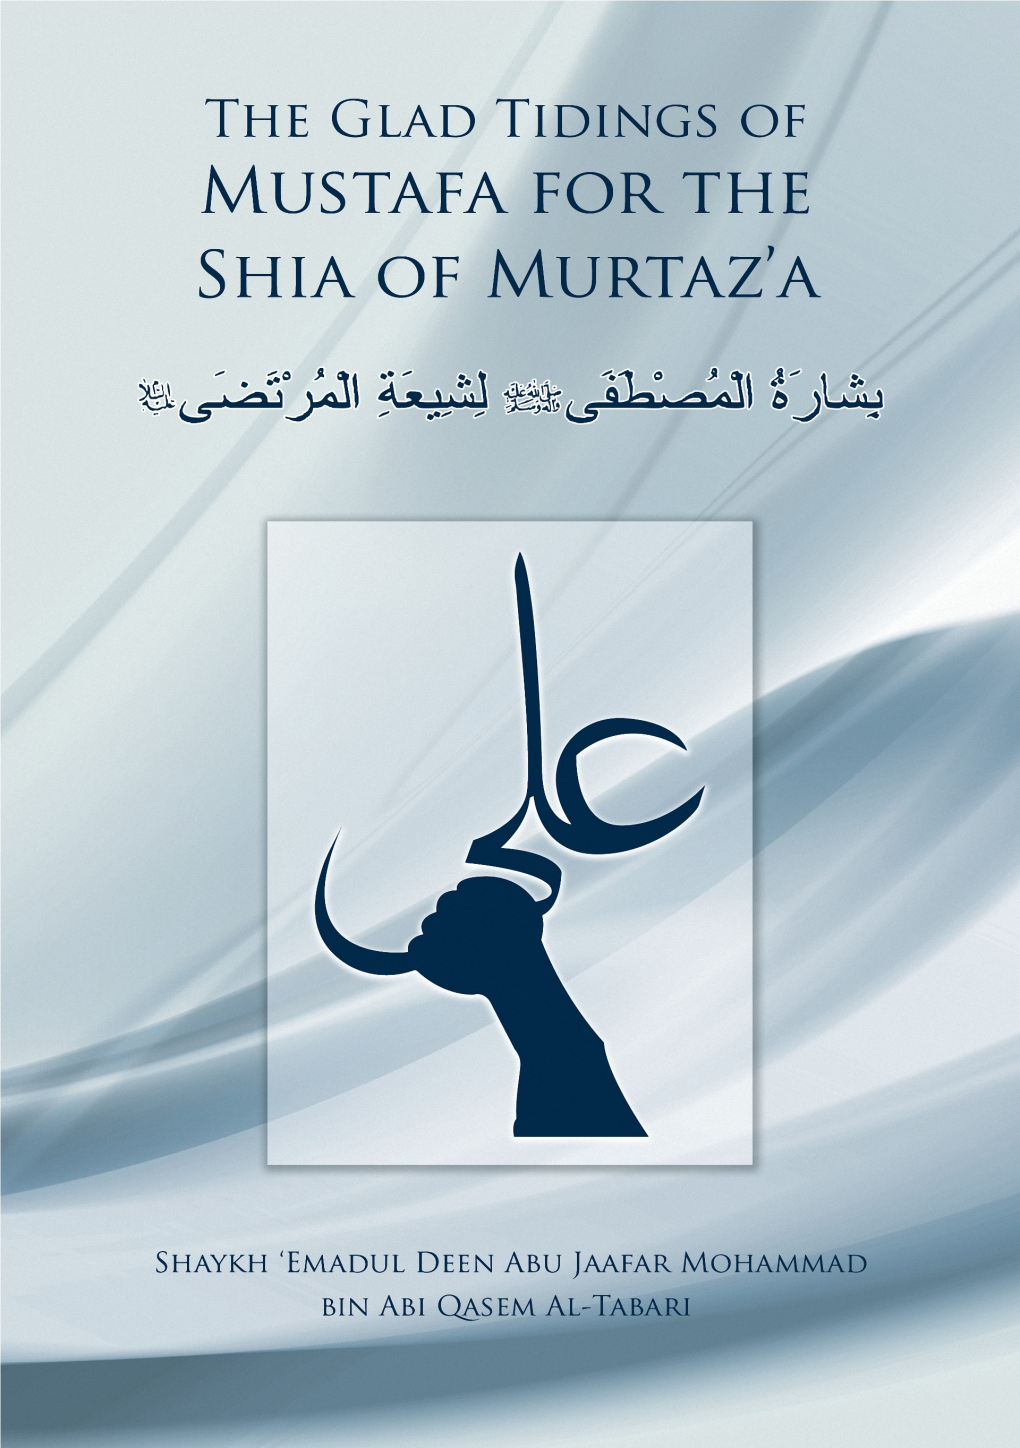 The Glad Tidings of Mustafa for the Shia of Murtaz'a